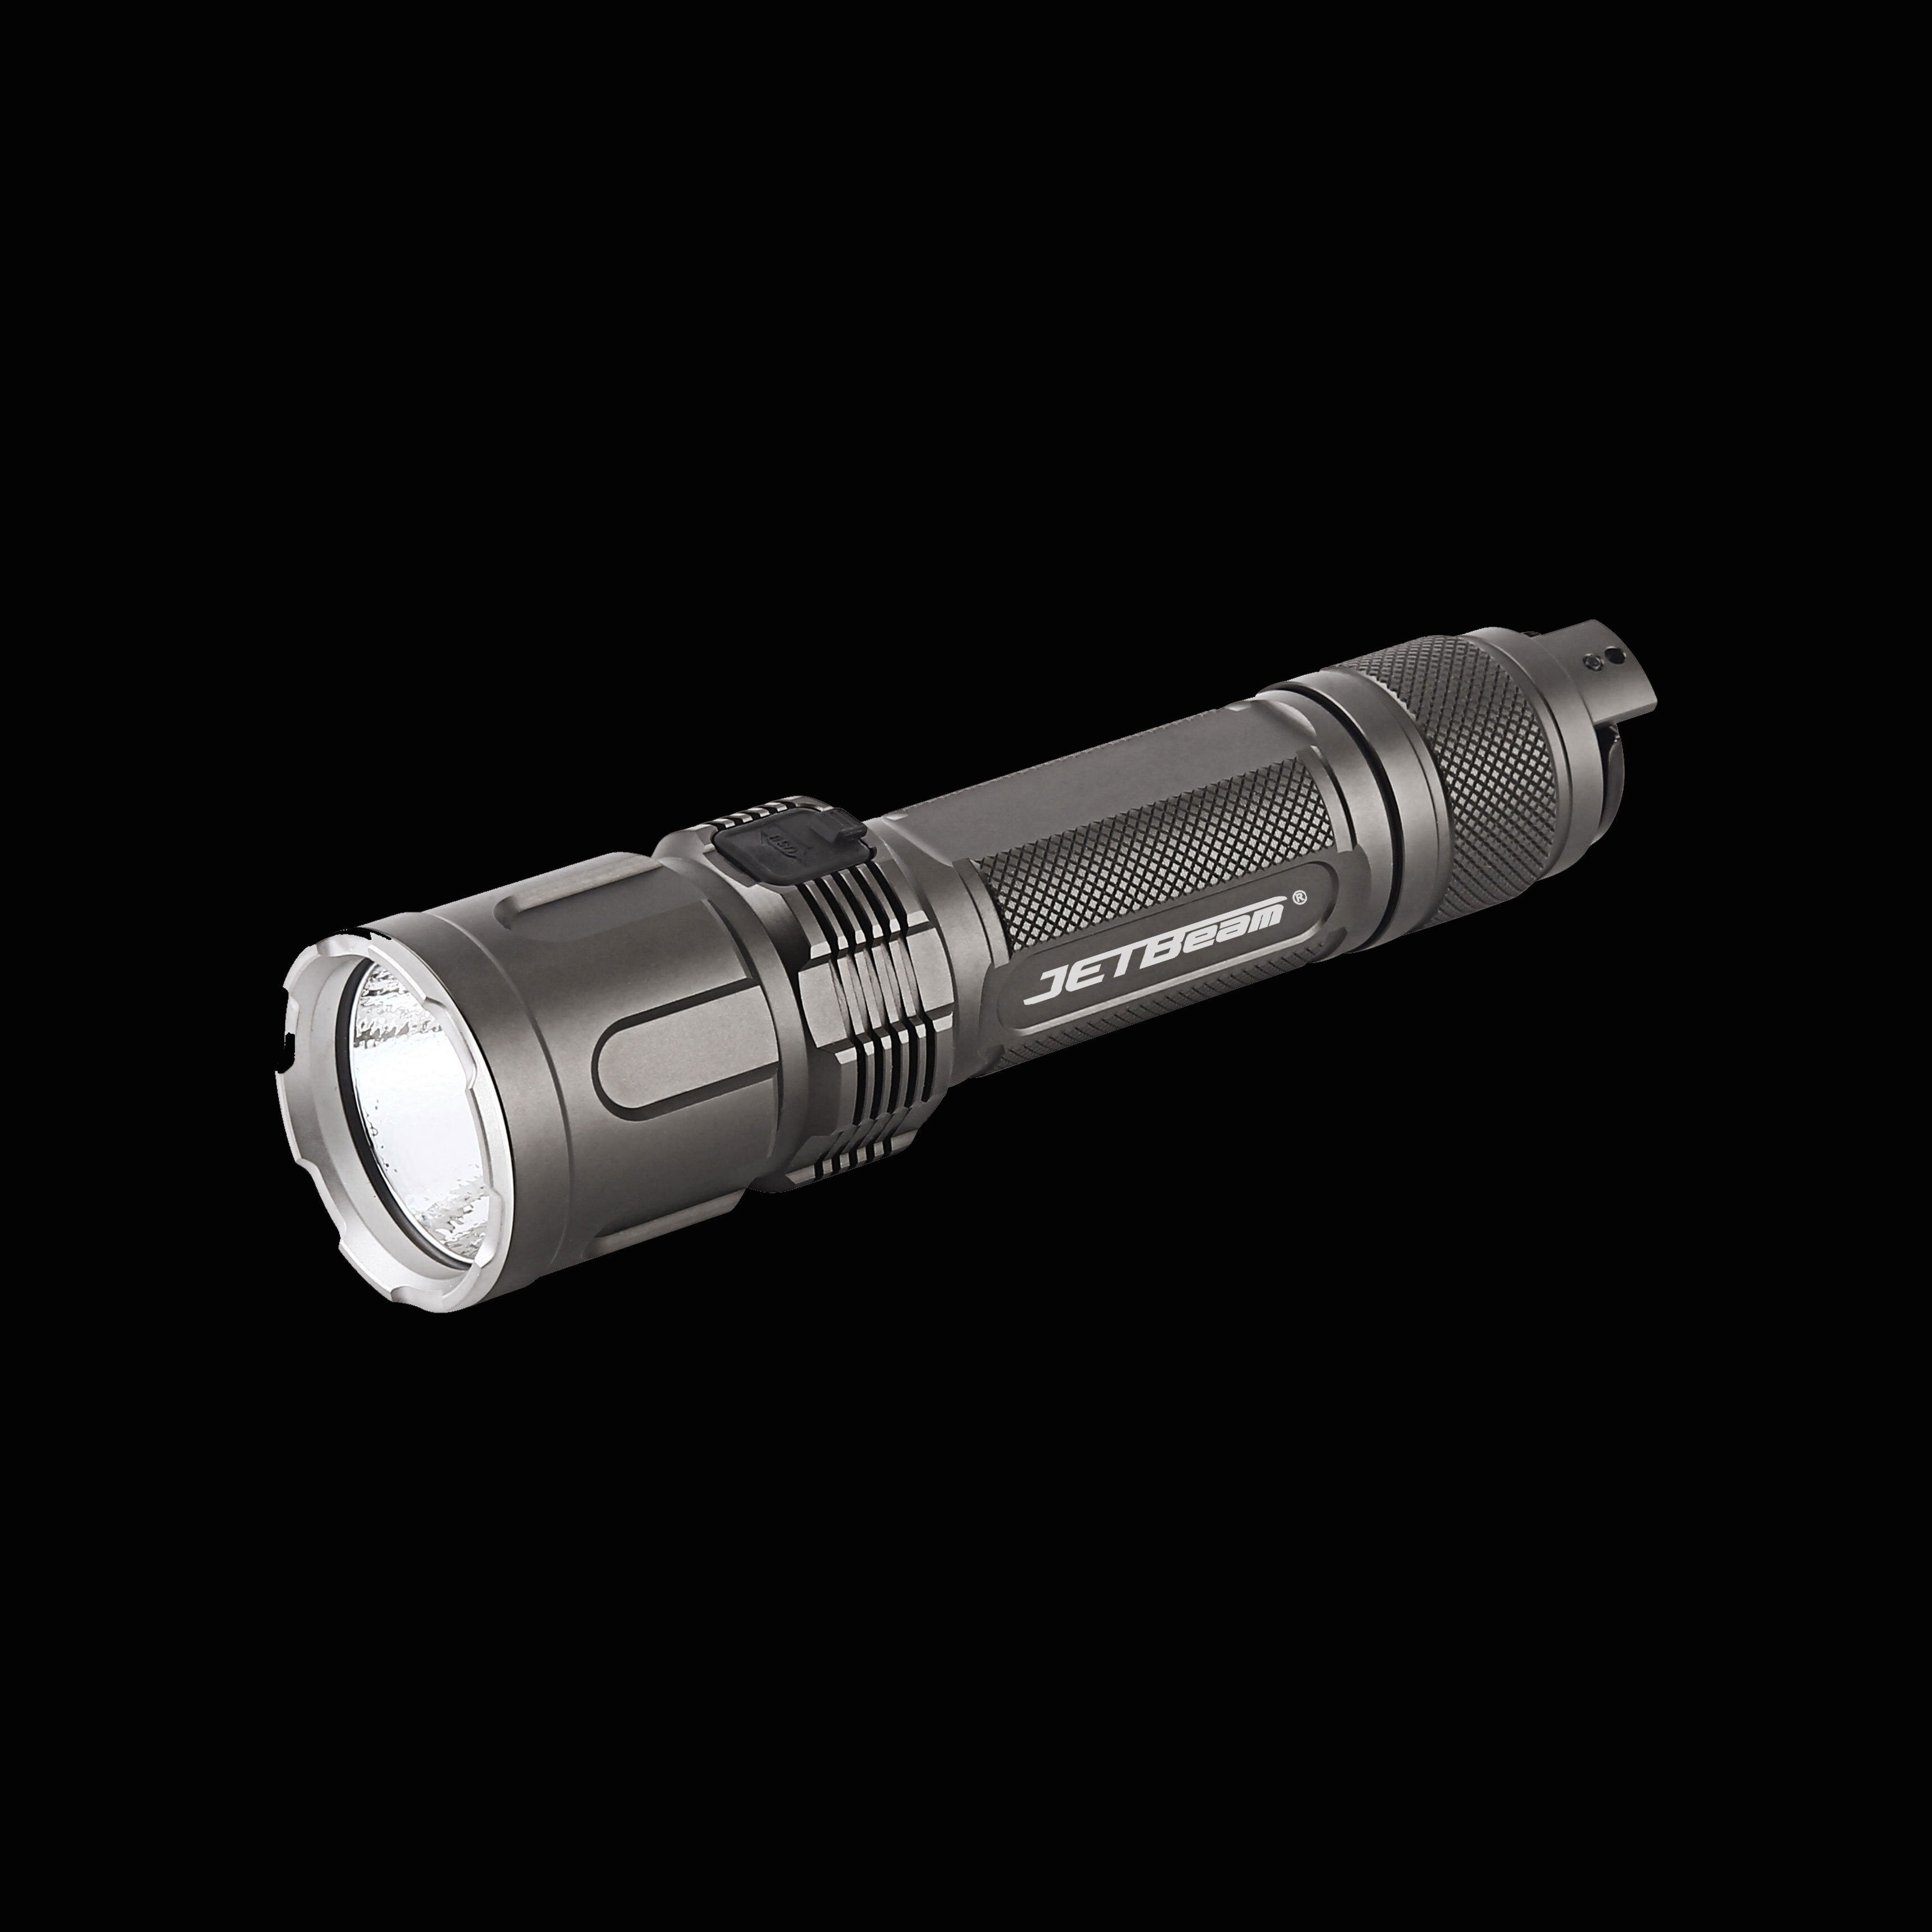 JETBeam TH20 GUARDIAN CREE XHP70.2 LED 3980 Lumens Tactical Flashlight